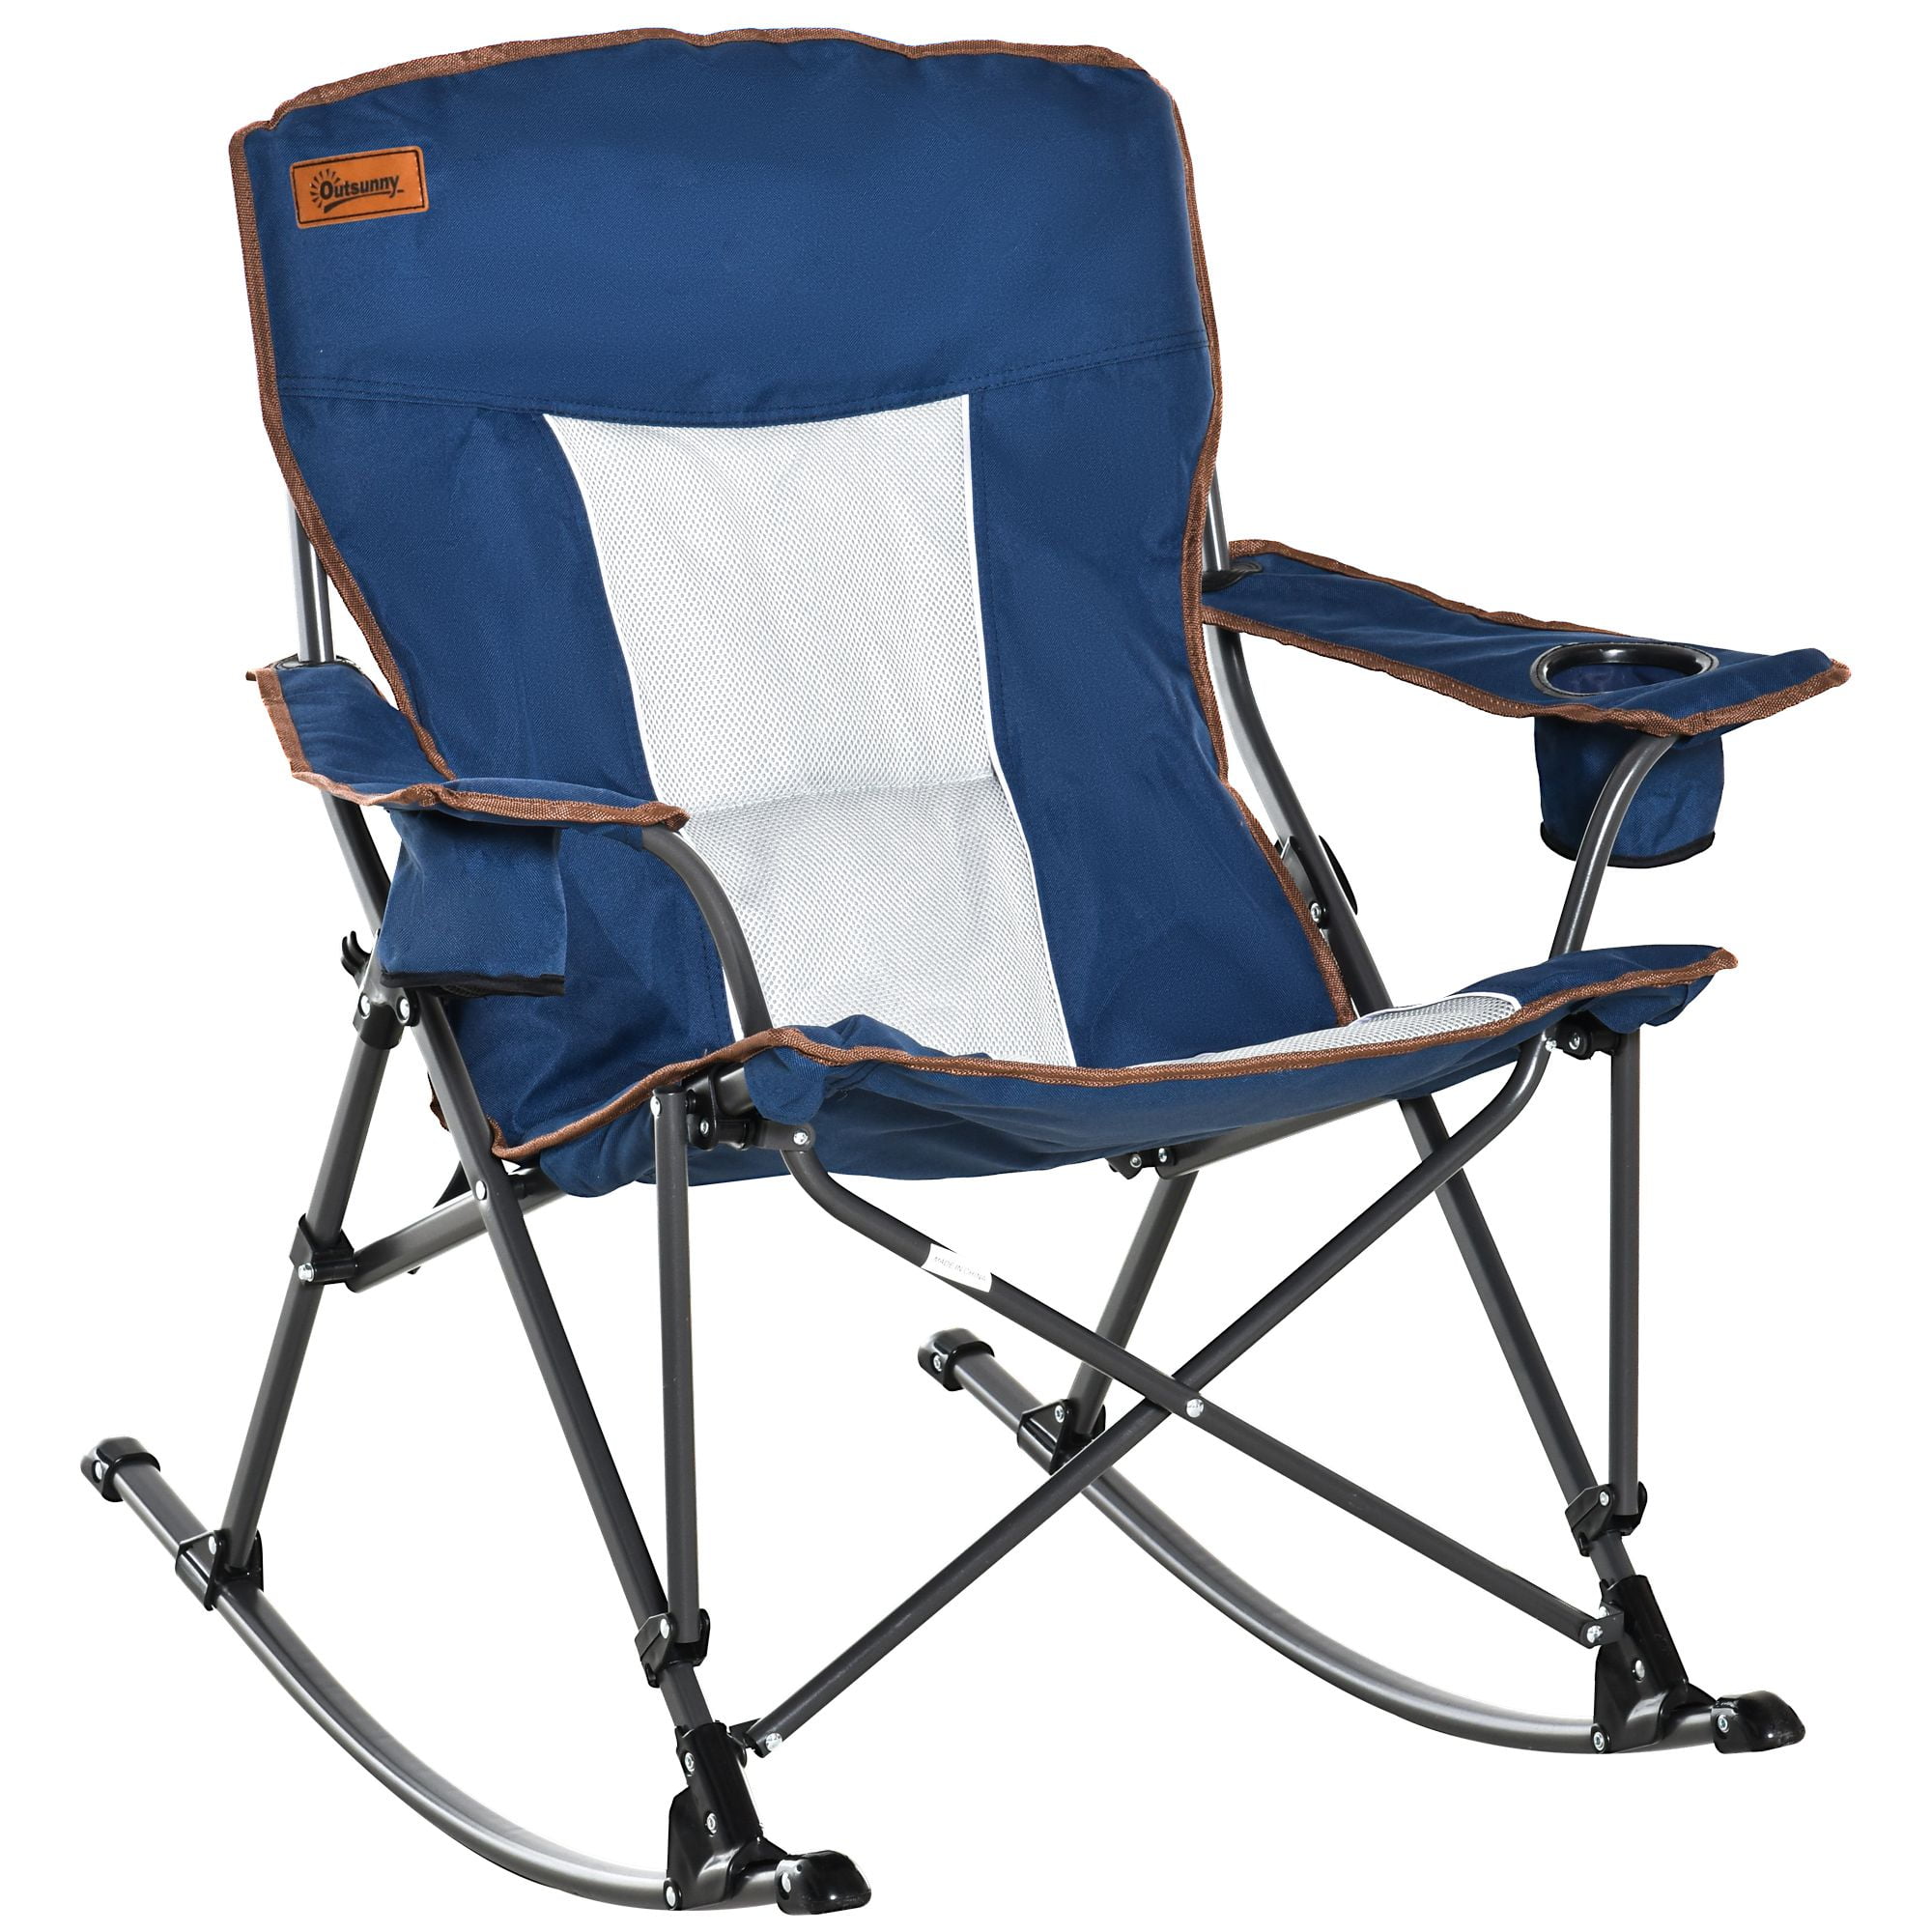 GCI Outdoor Comfort Pro Chair, Heathered Royal - Walmart.com